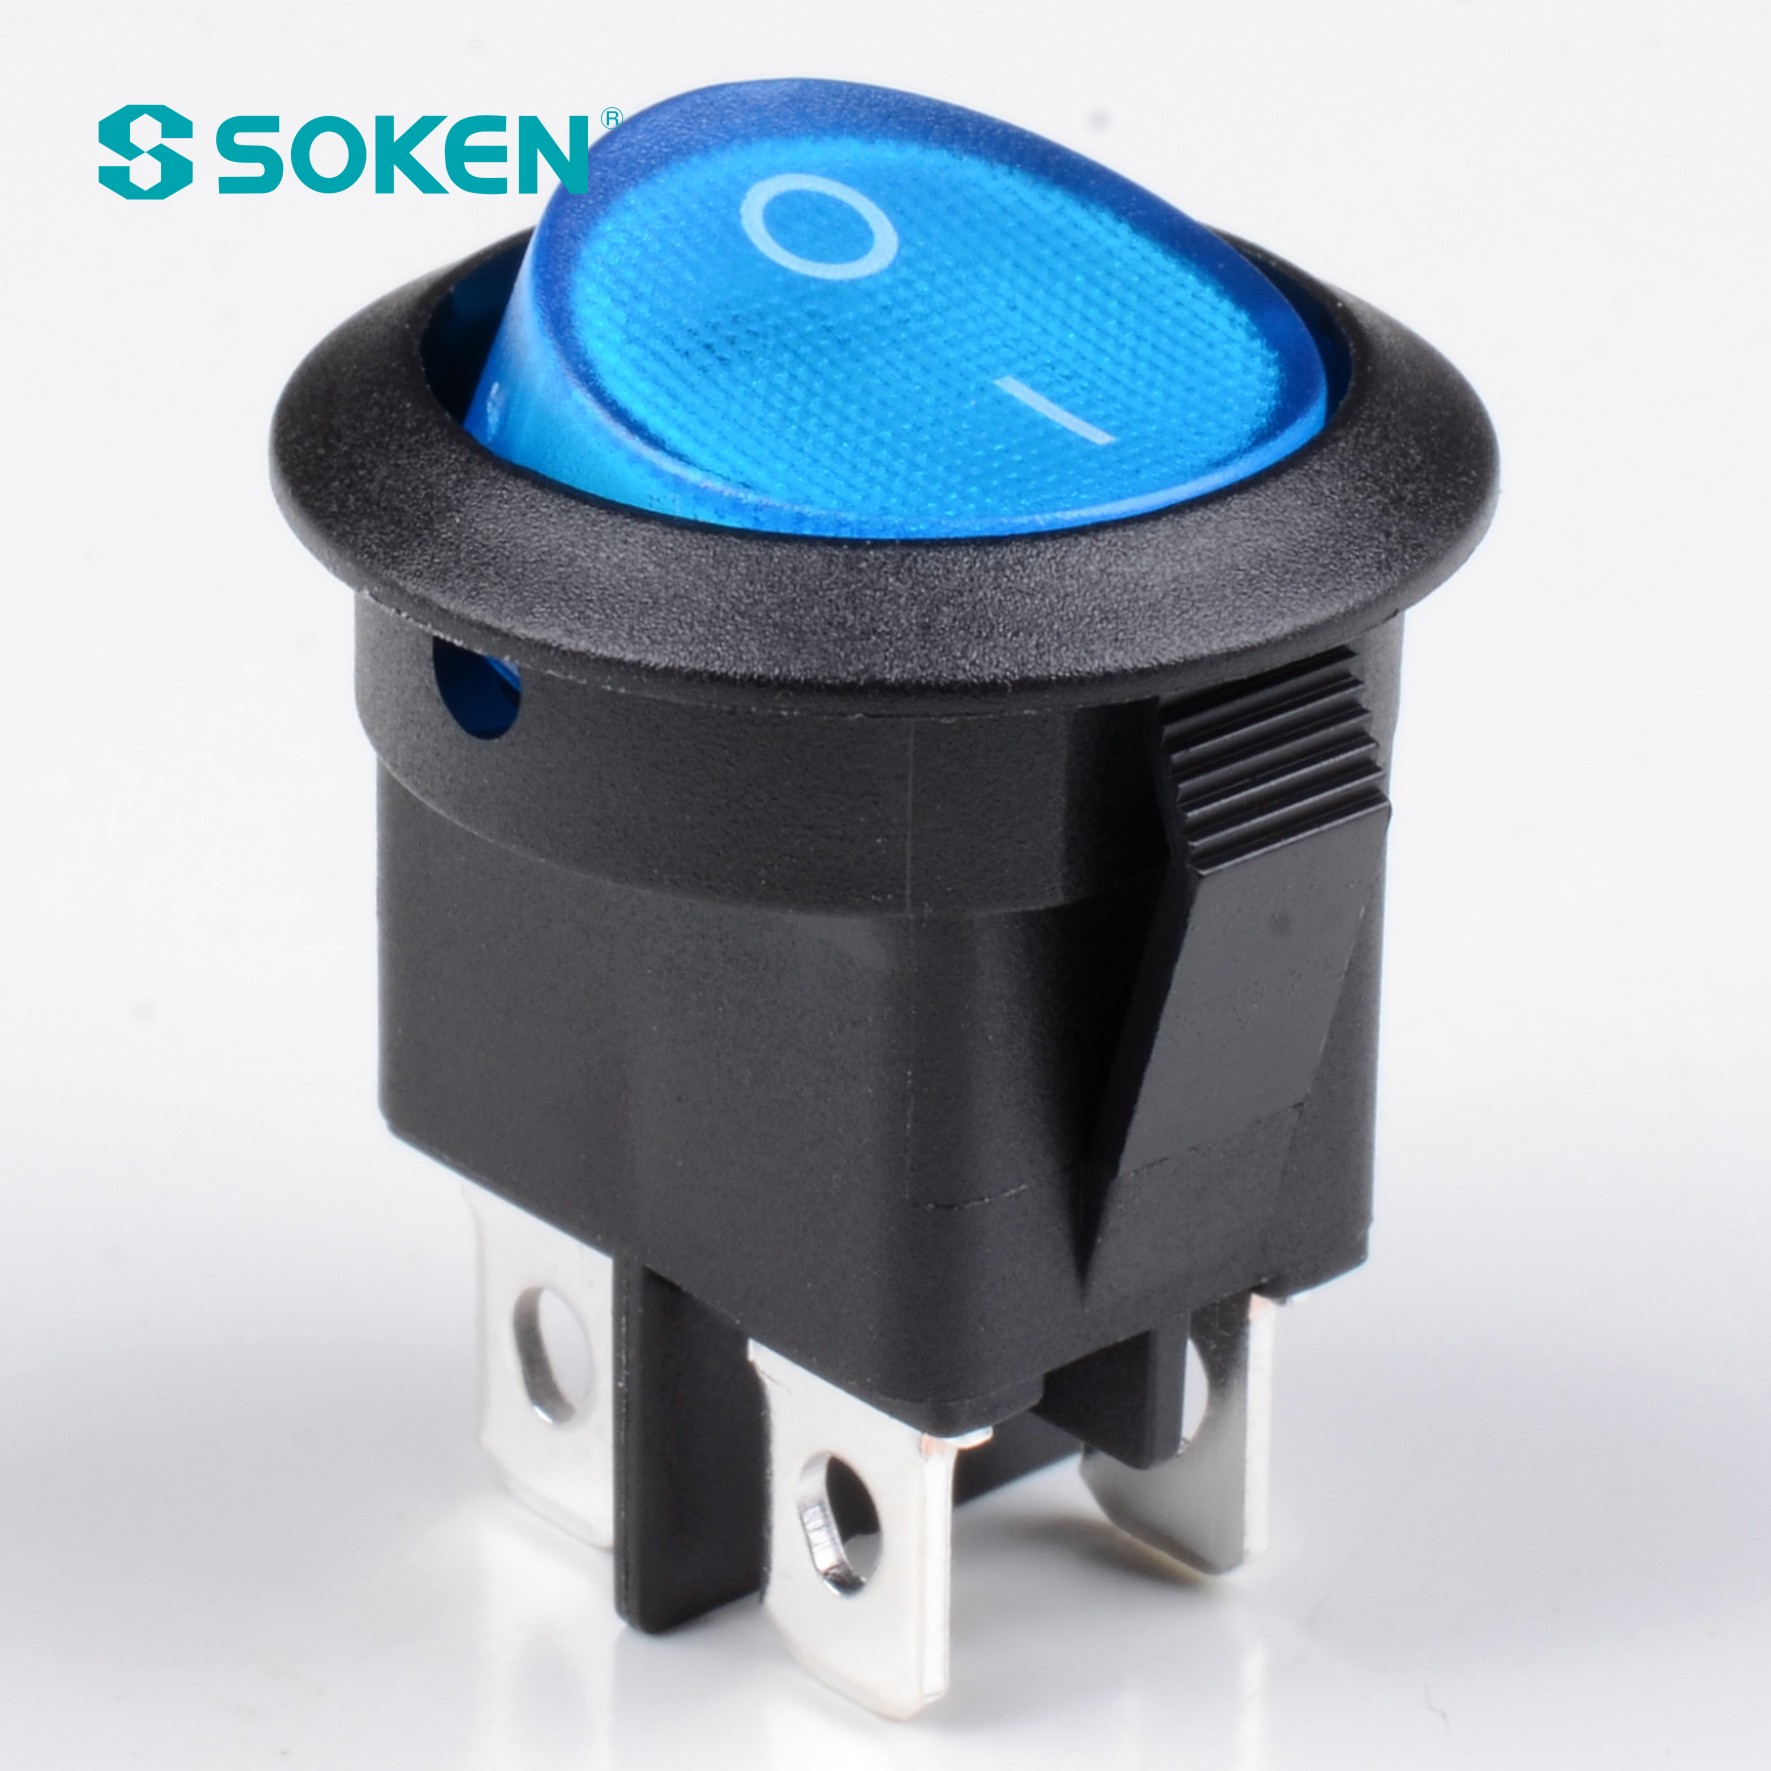 Interruptor basculante redondo impermeable Soken Rk2-13c